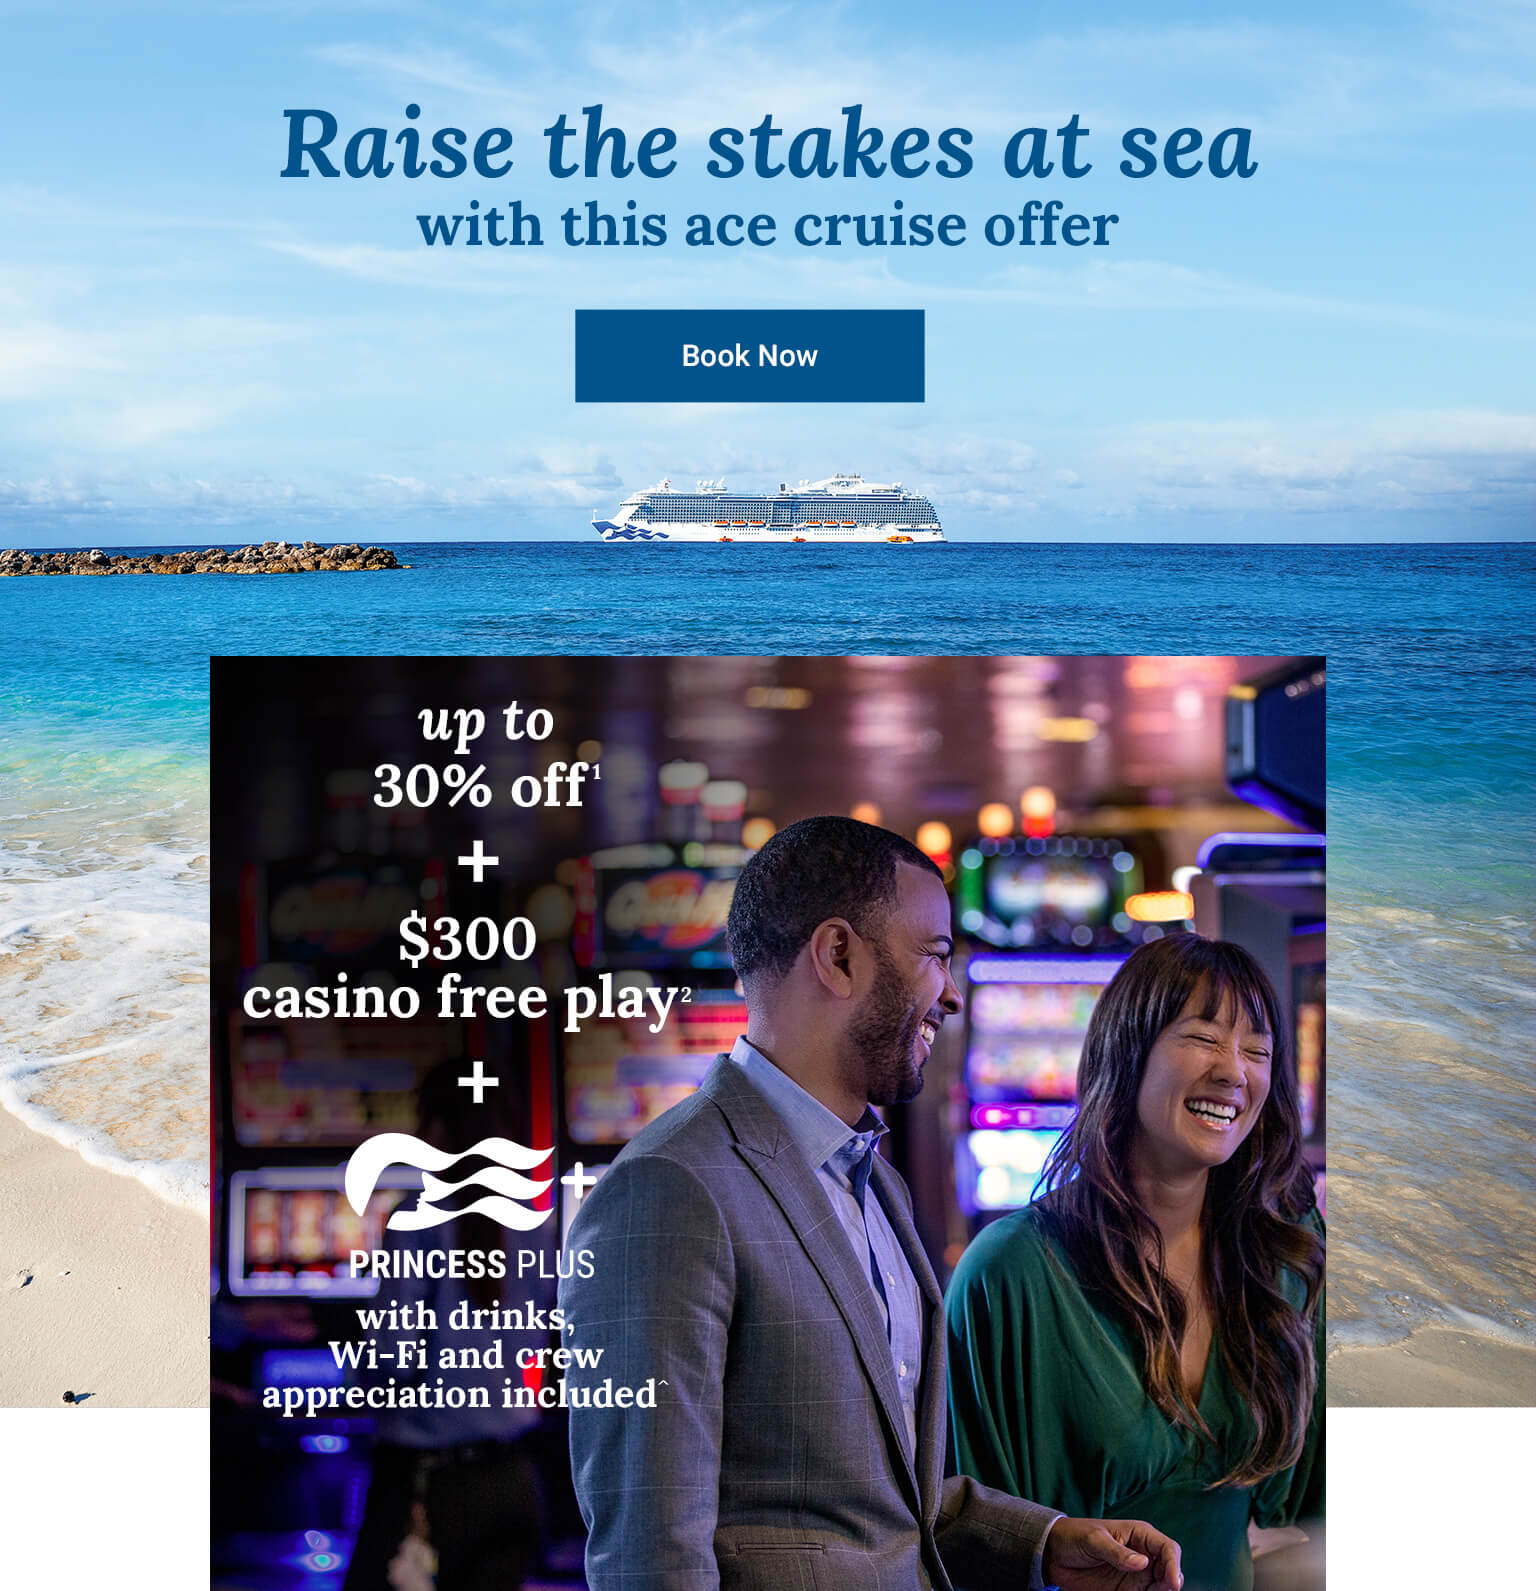 free balcony stateroom + $500 casino free play + Princess Plus. Click here to book.